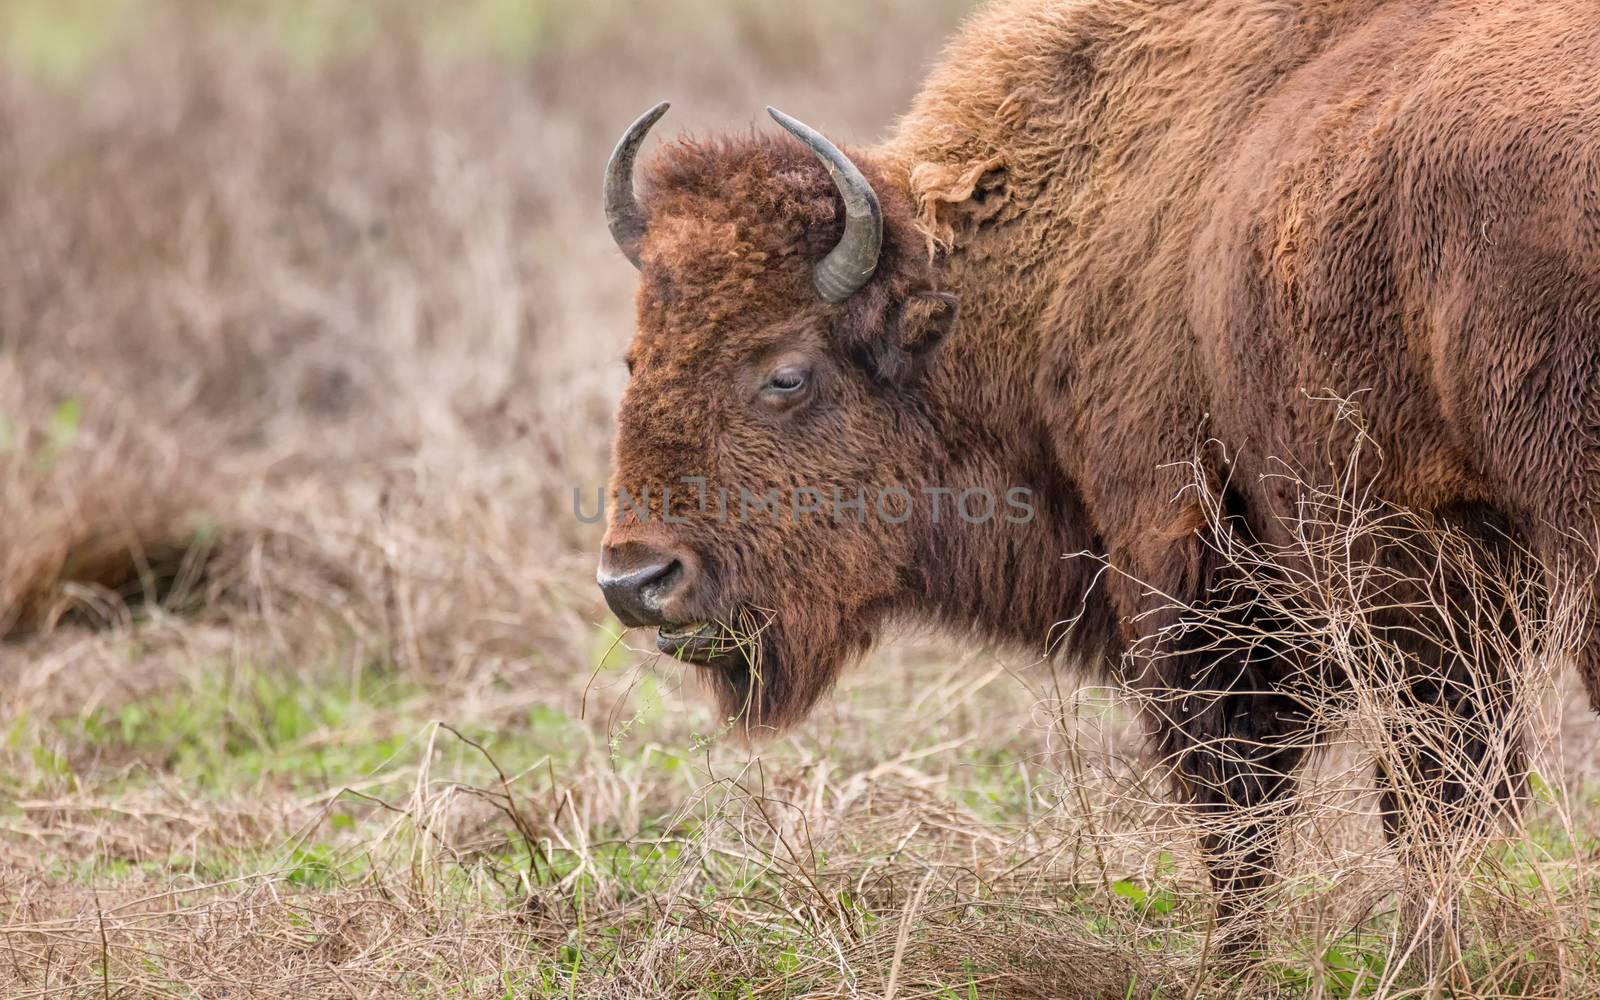 Bison Buffalo Portrait in a Grassy Field, Color Image